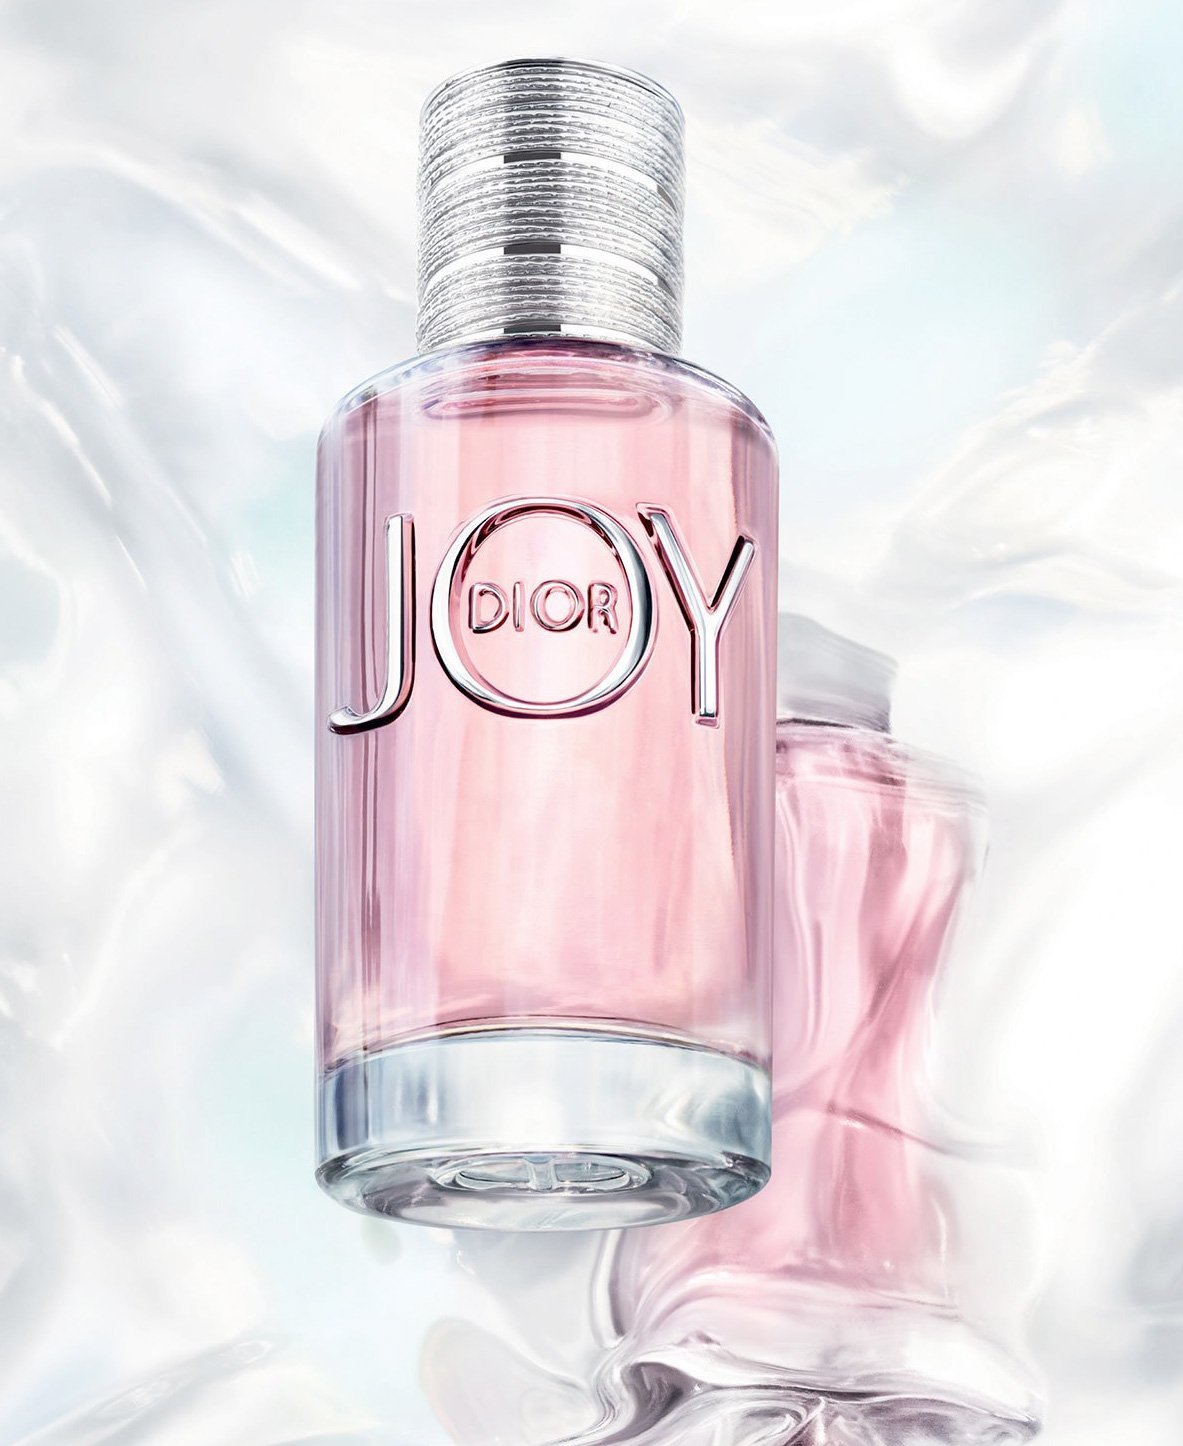 Dior Joy Deodorant - My Perfume Shop Australia